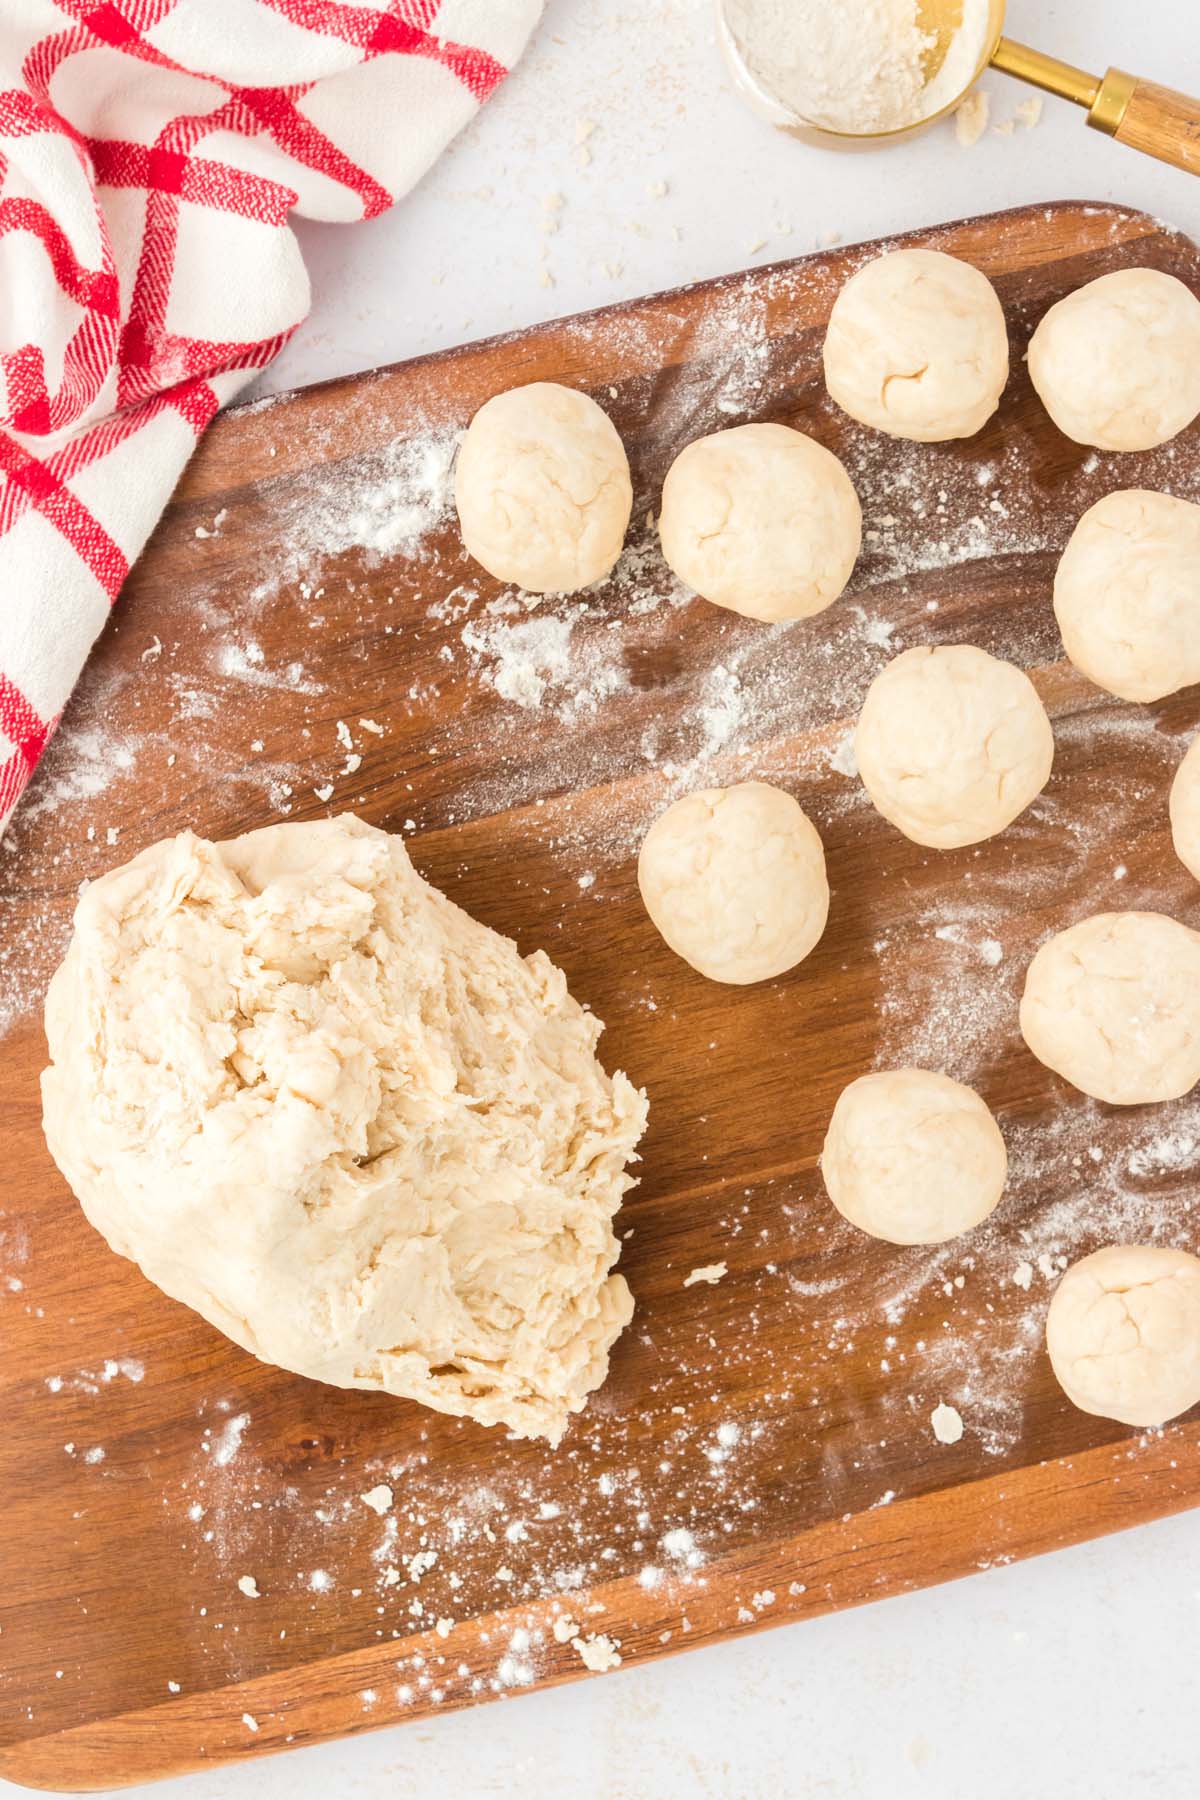 Balls of dough on a board.